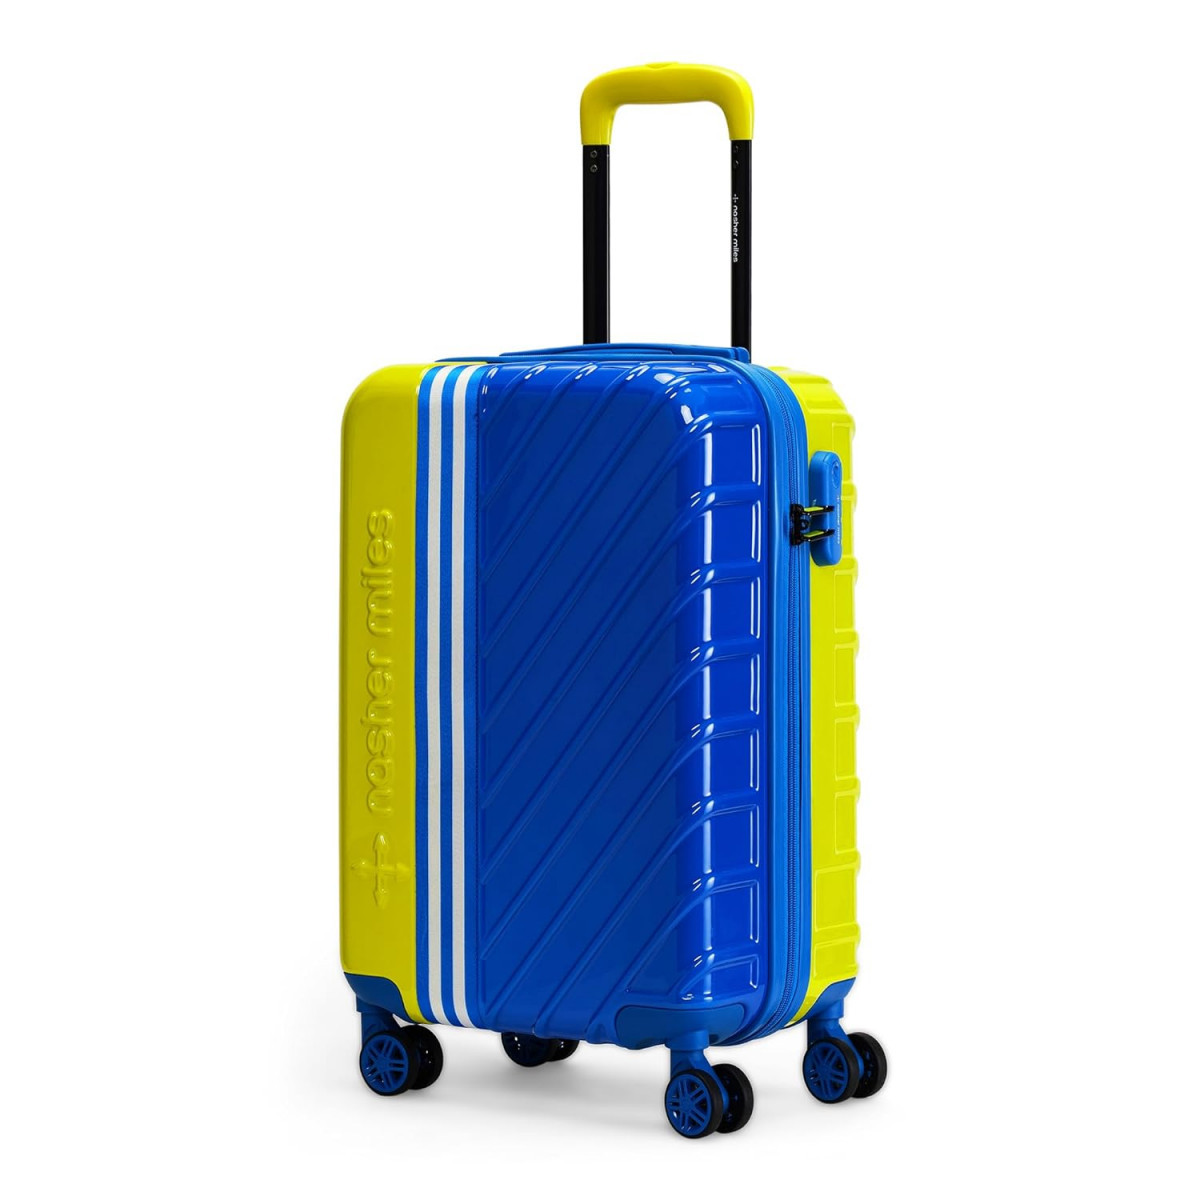 Nasher Miles Vegas Hard-Sided Polycarbonate Cabin Luggage Lime GreenAzure Blue 20 inch 55cm Trolley Bag